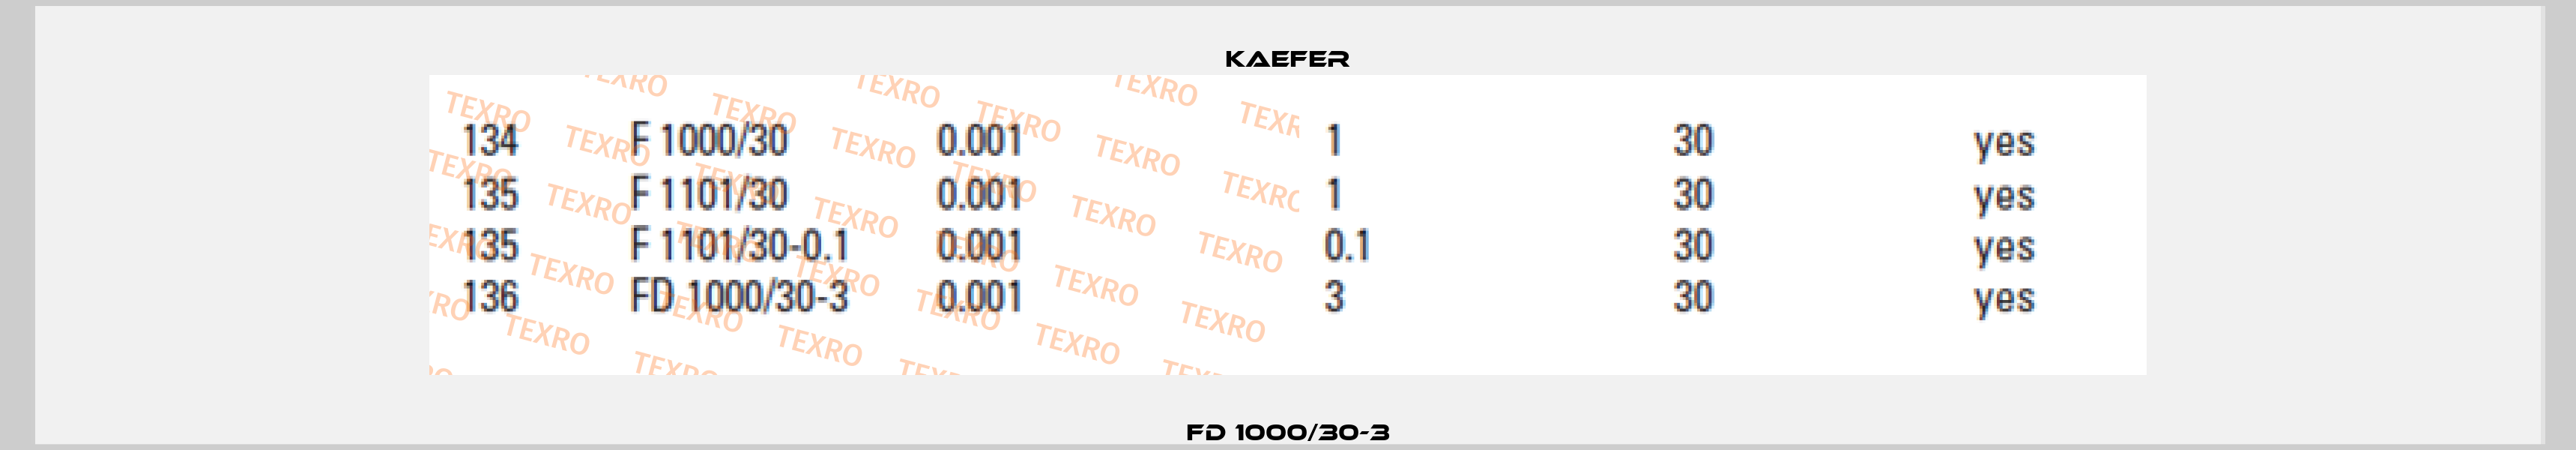 FD 1000/30-3 Kaefer